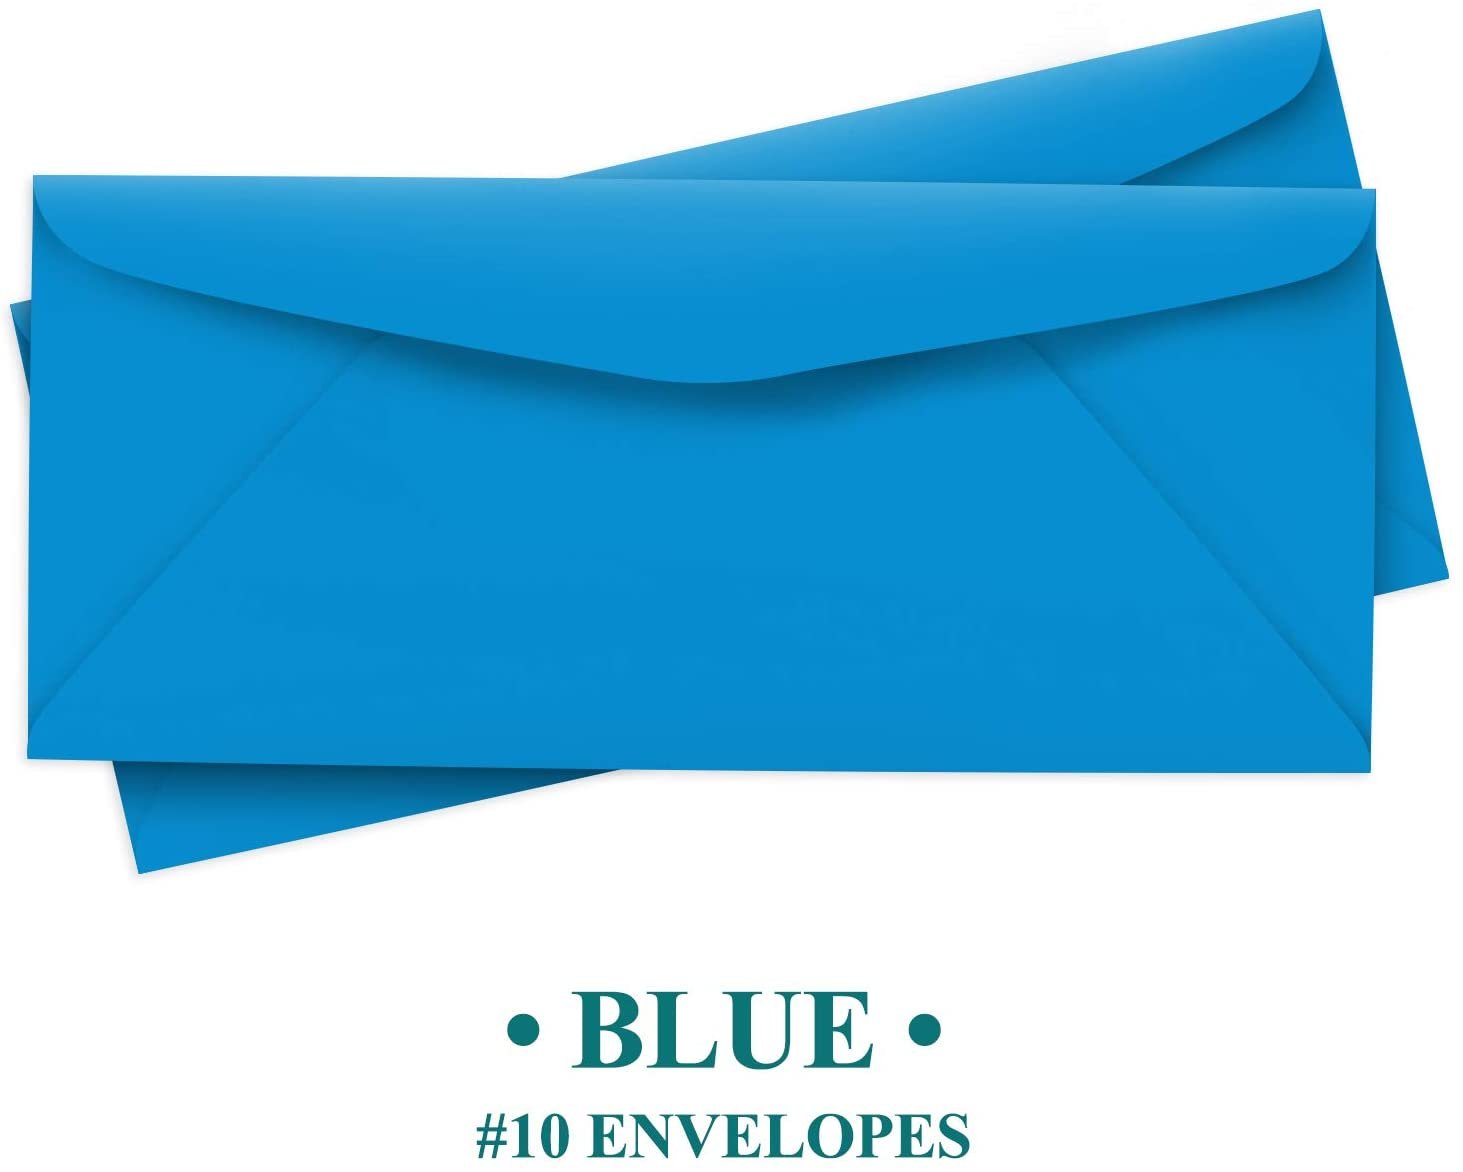 50 Envelopes Per Pack Premium Bright Color #10 Envelopes 4 1//8 x 9 1//2/"